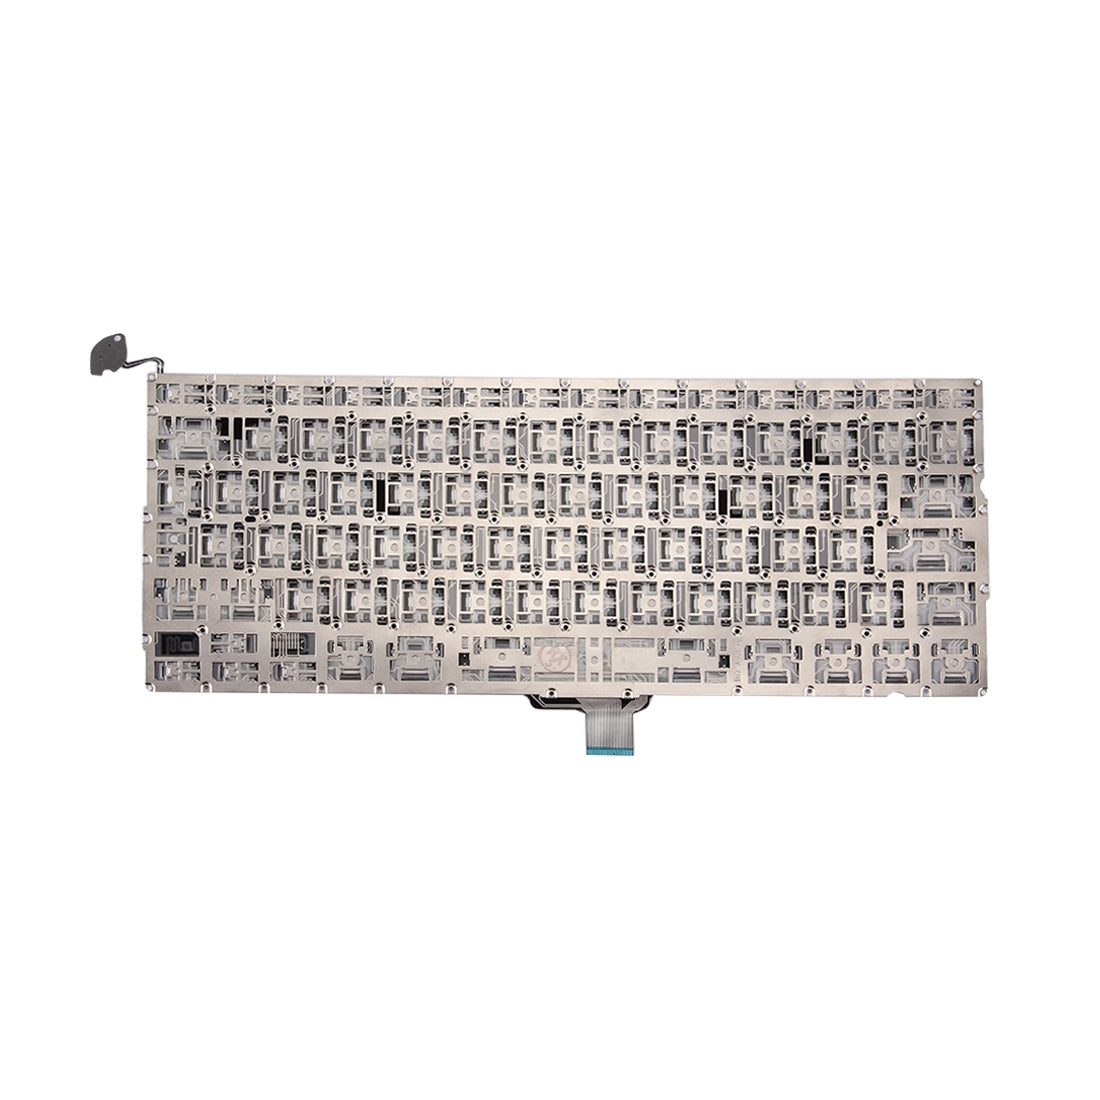 Spanish keyboard with ñ Apple MacBook Pro 13.3 A1278 2009 2012